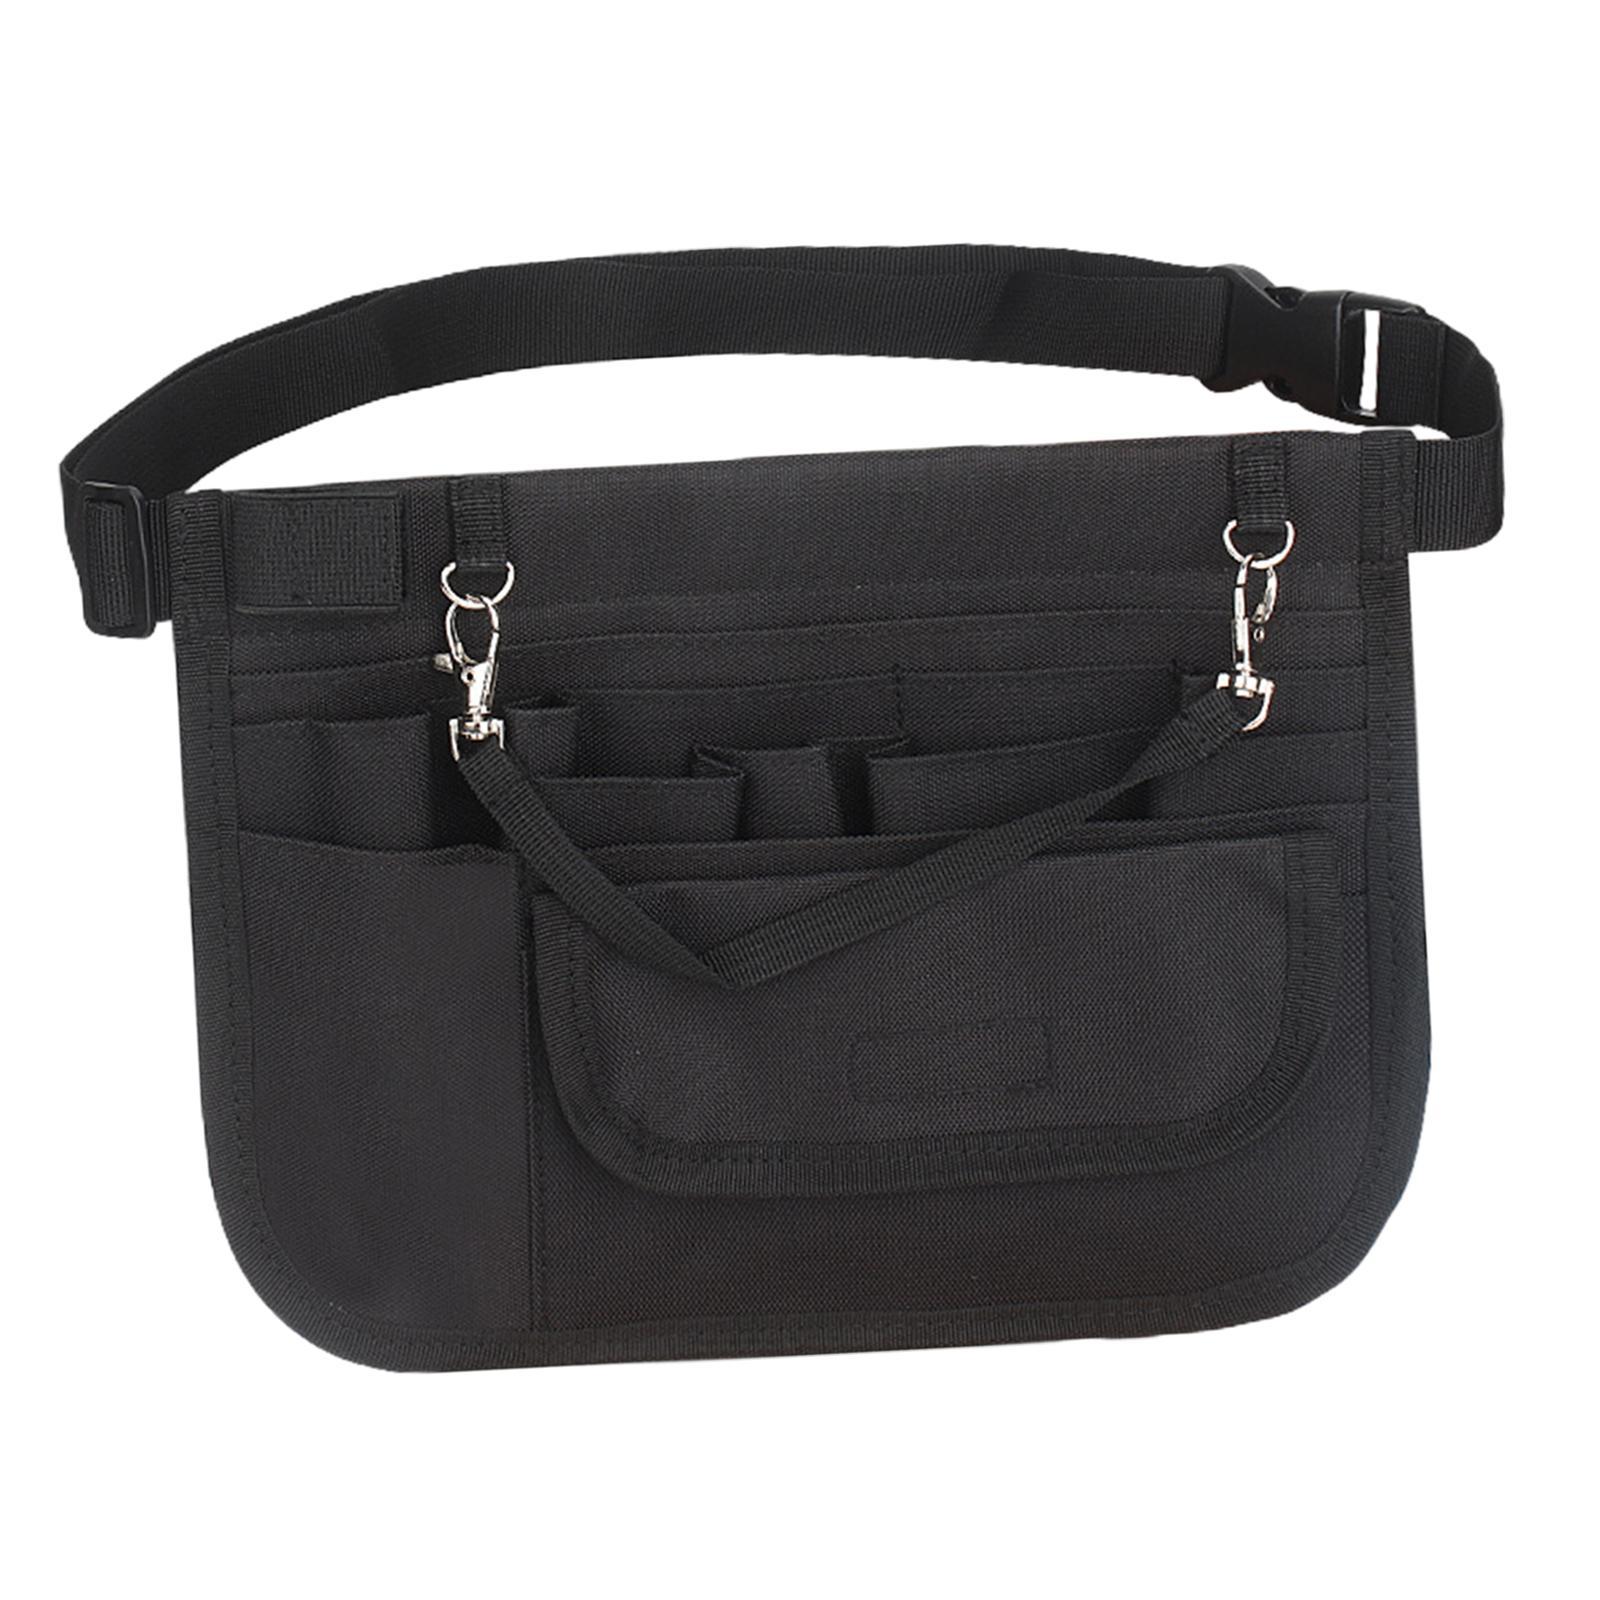 Nurse Waist Bag Adjustable Fanny Pack for Hospital Accessories Care  Tool